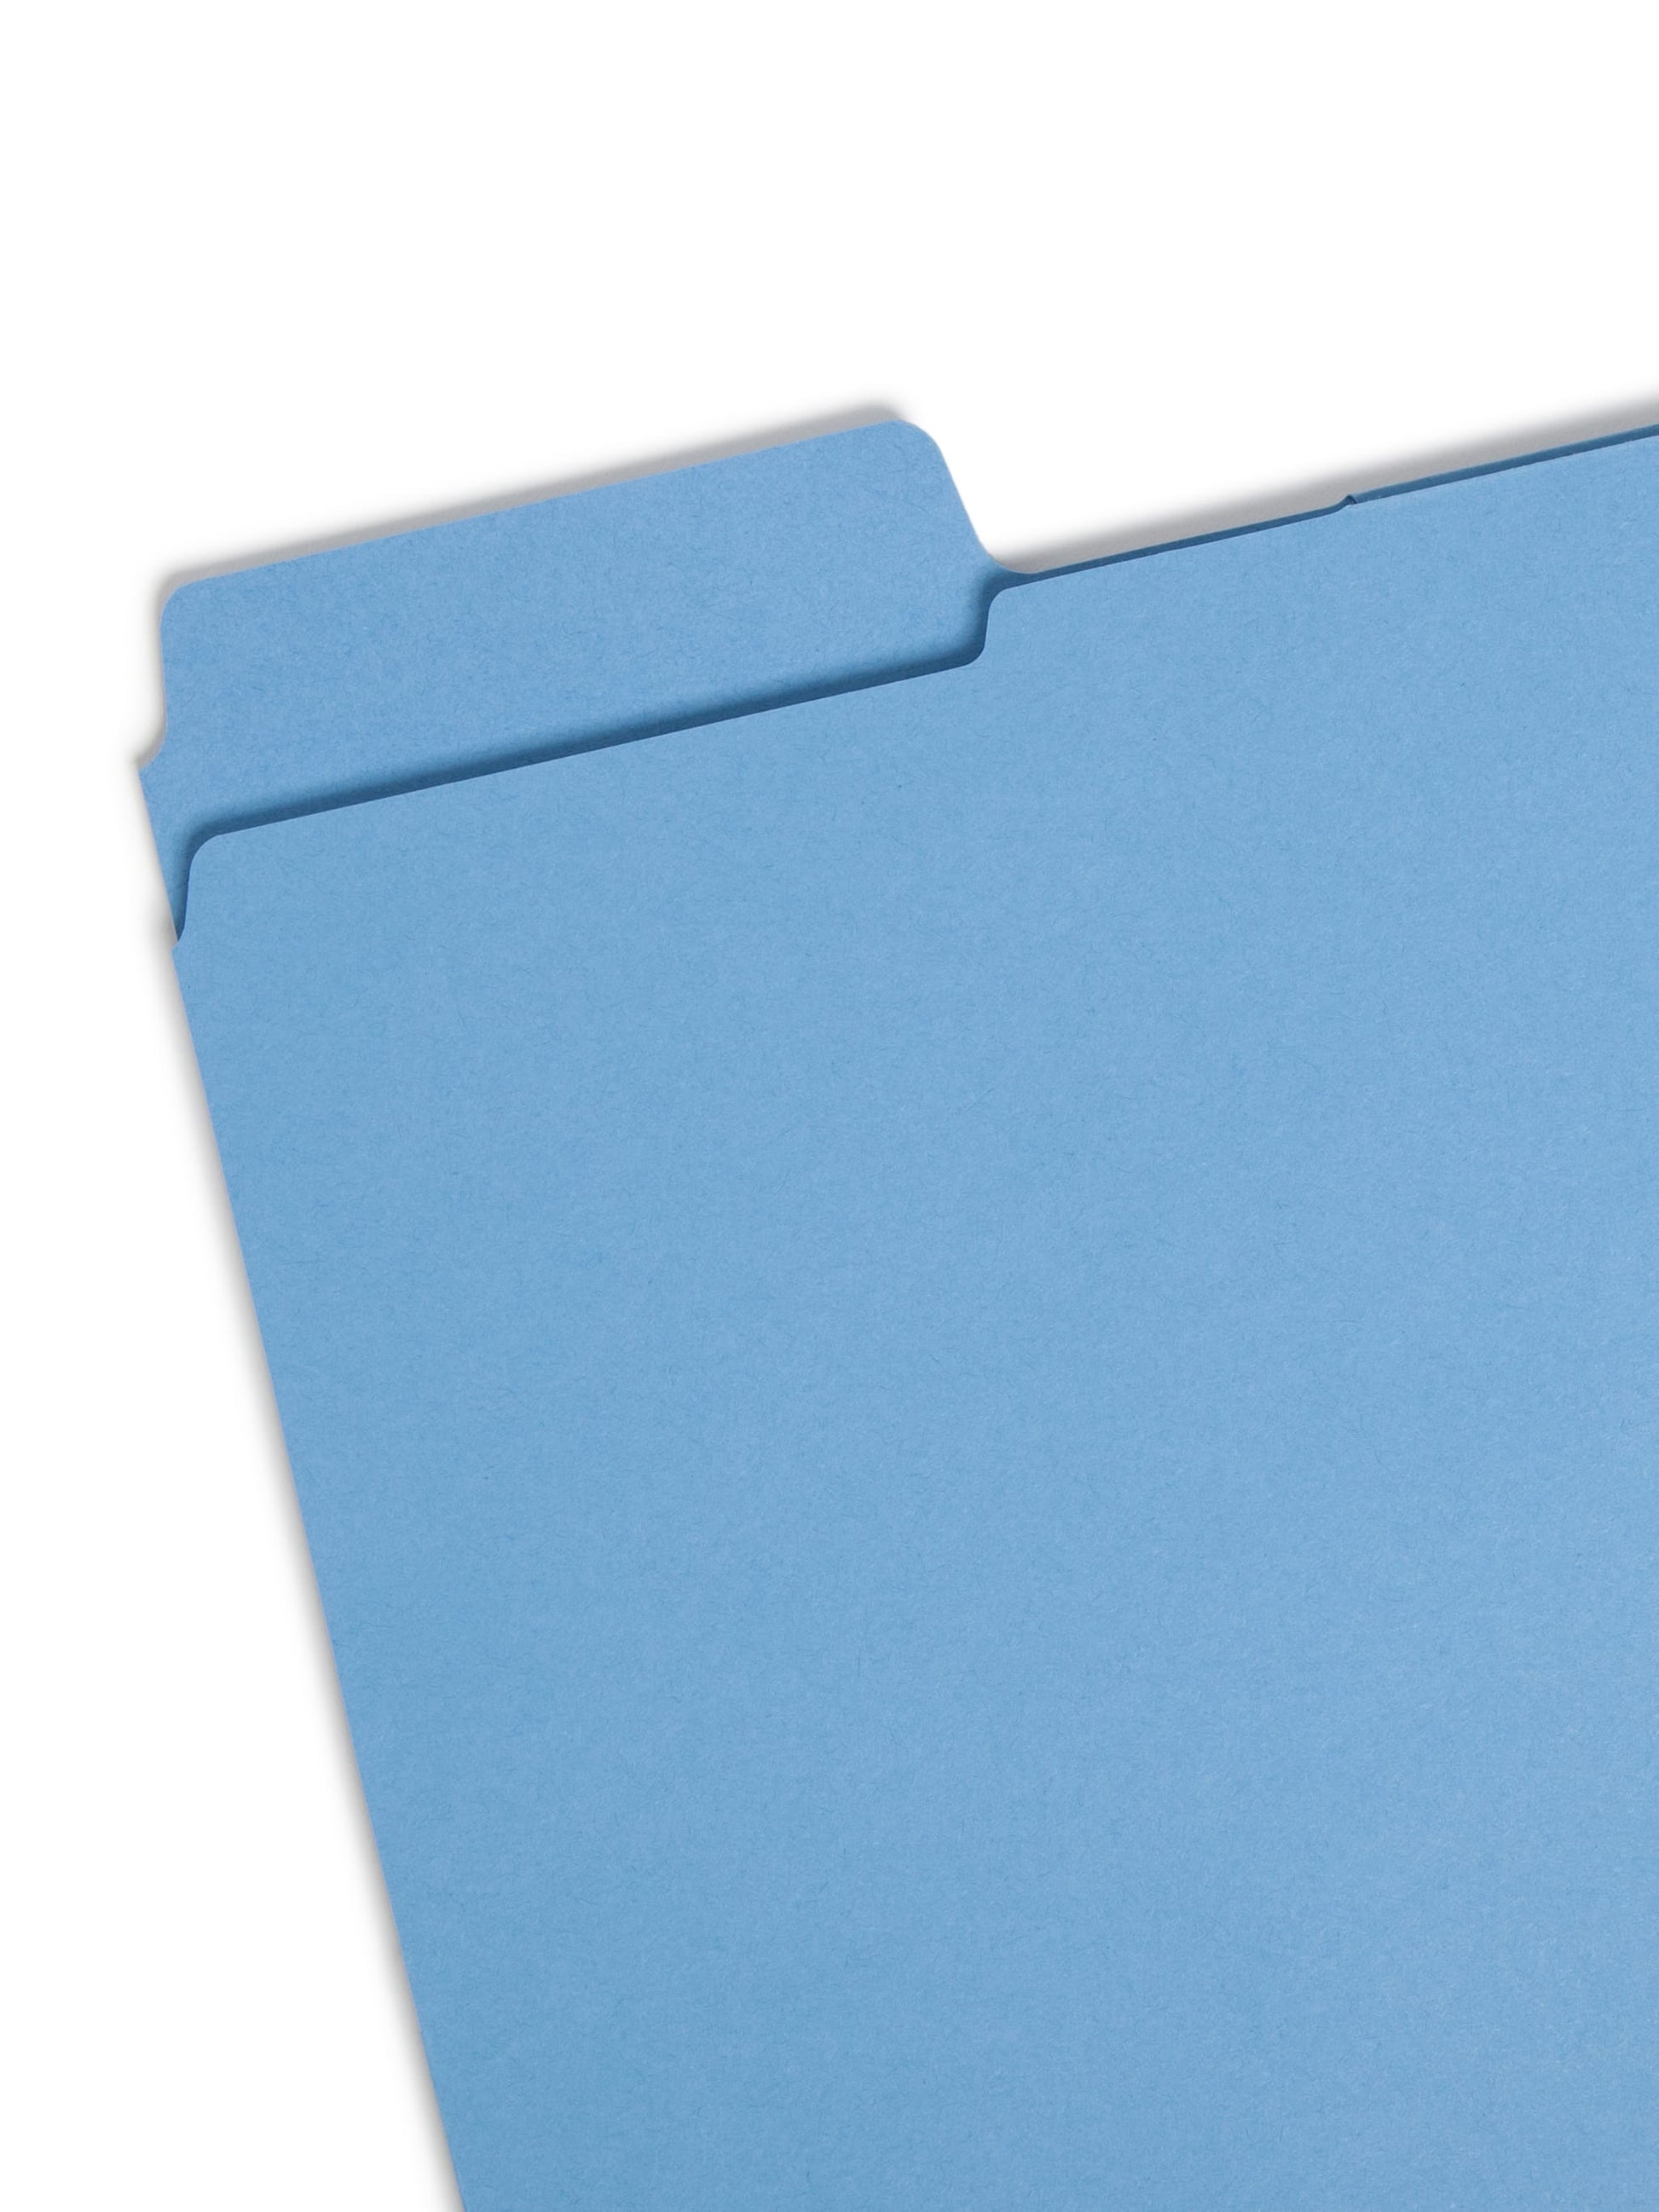 SuperTab®/Lockit® File Folders, 1/3 Cut Tab, 3 Pocket, Assorted Colors Color, Letter Size, Set of 1, 086486119054